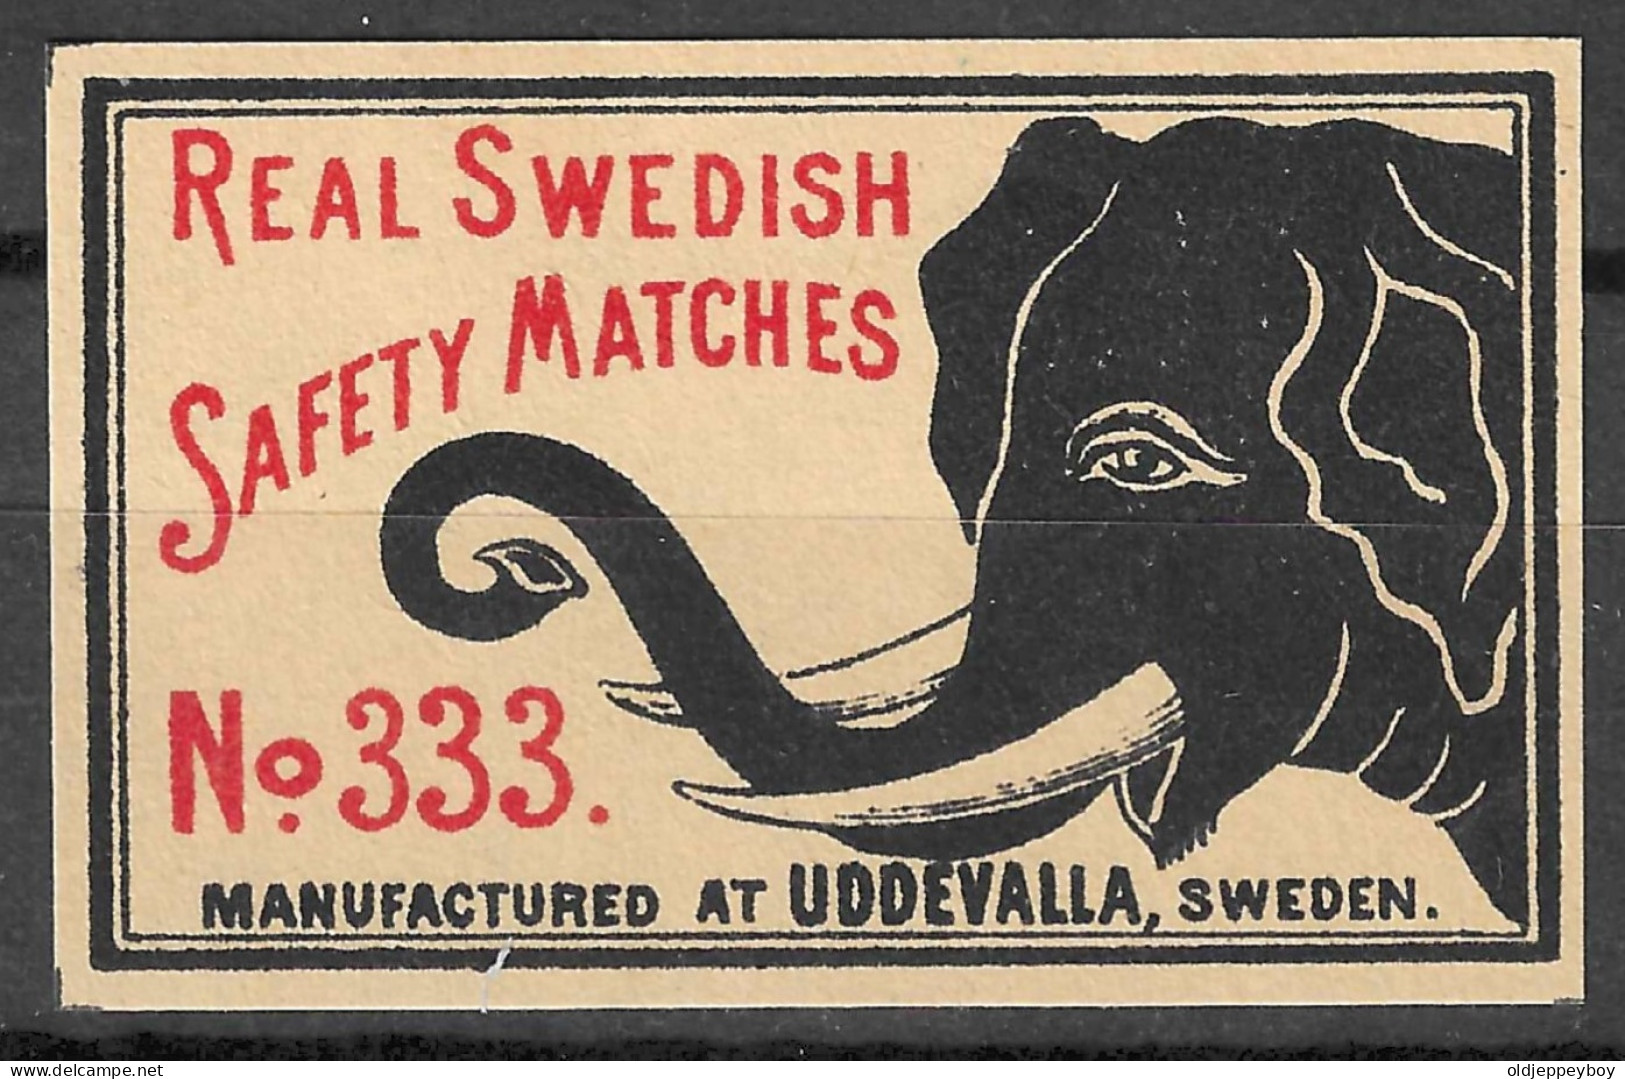 MADE IN SWEDEN UDDEVALLE VINTAGE Phillumeny MATCHBOX LABEL REAL SWEDISH SAFETY MATCHES Nº333  5.5  X 3.5 CM  RARE - Scatole Di Fiammiferi - Etichette